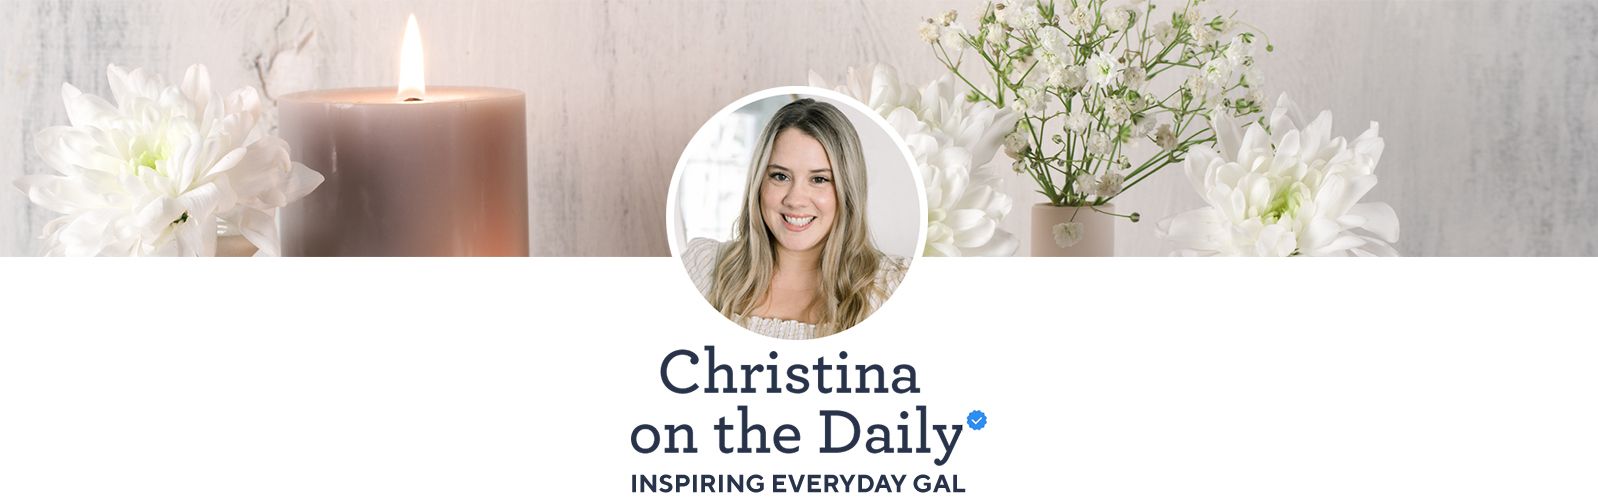 Christina on the Daily - Inspiring Everyday Gal